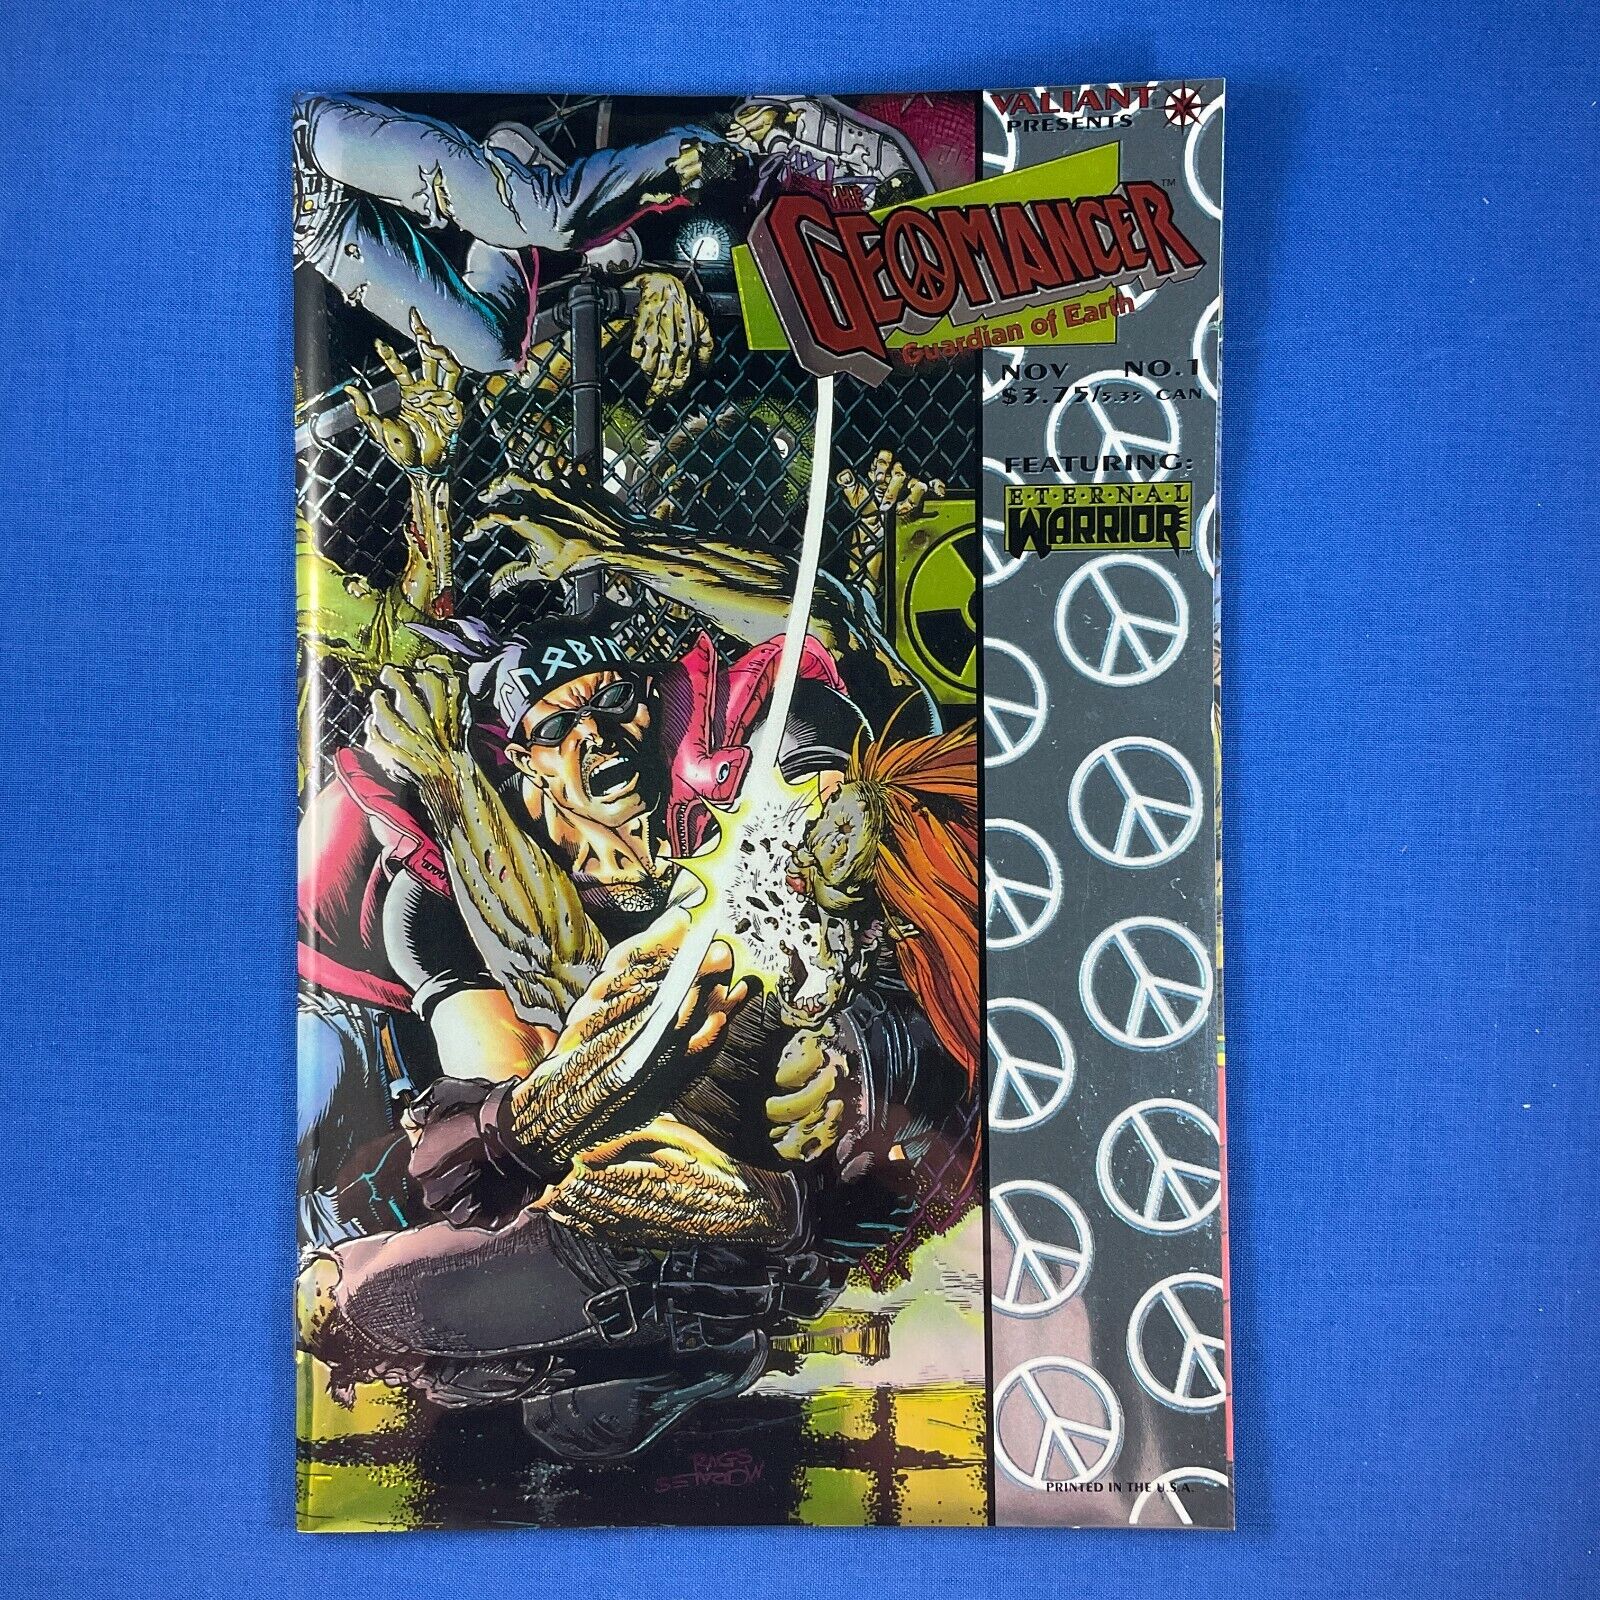 Geomancer #1 VALIANT COMICS 1994 Wrap-Around Chromium Cover by Rags Morales 